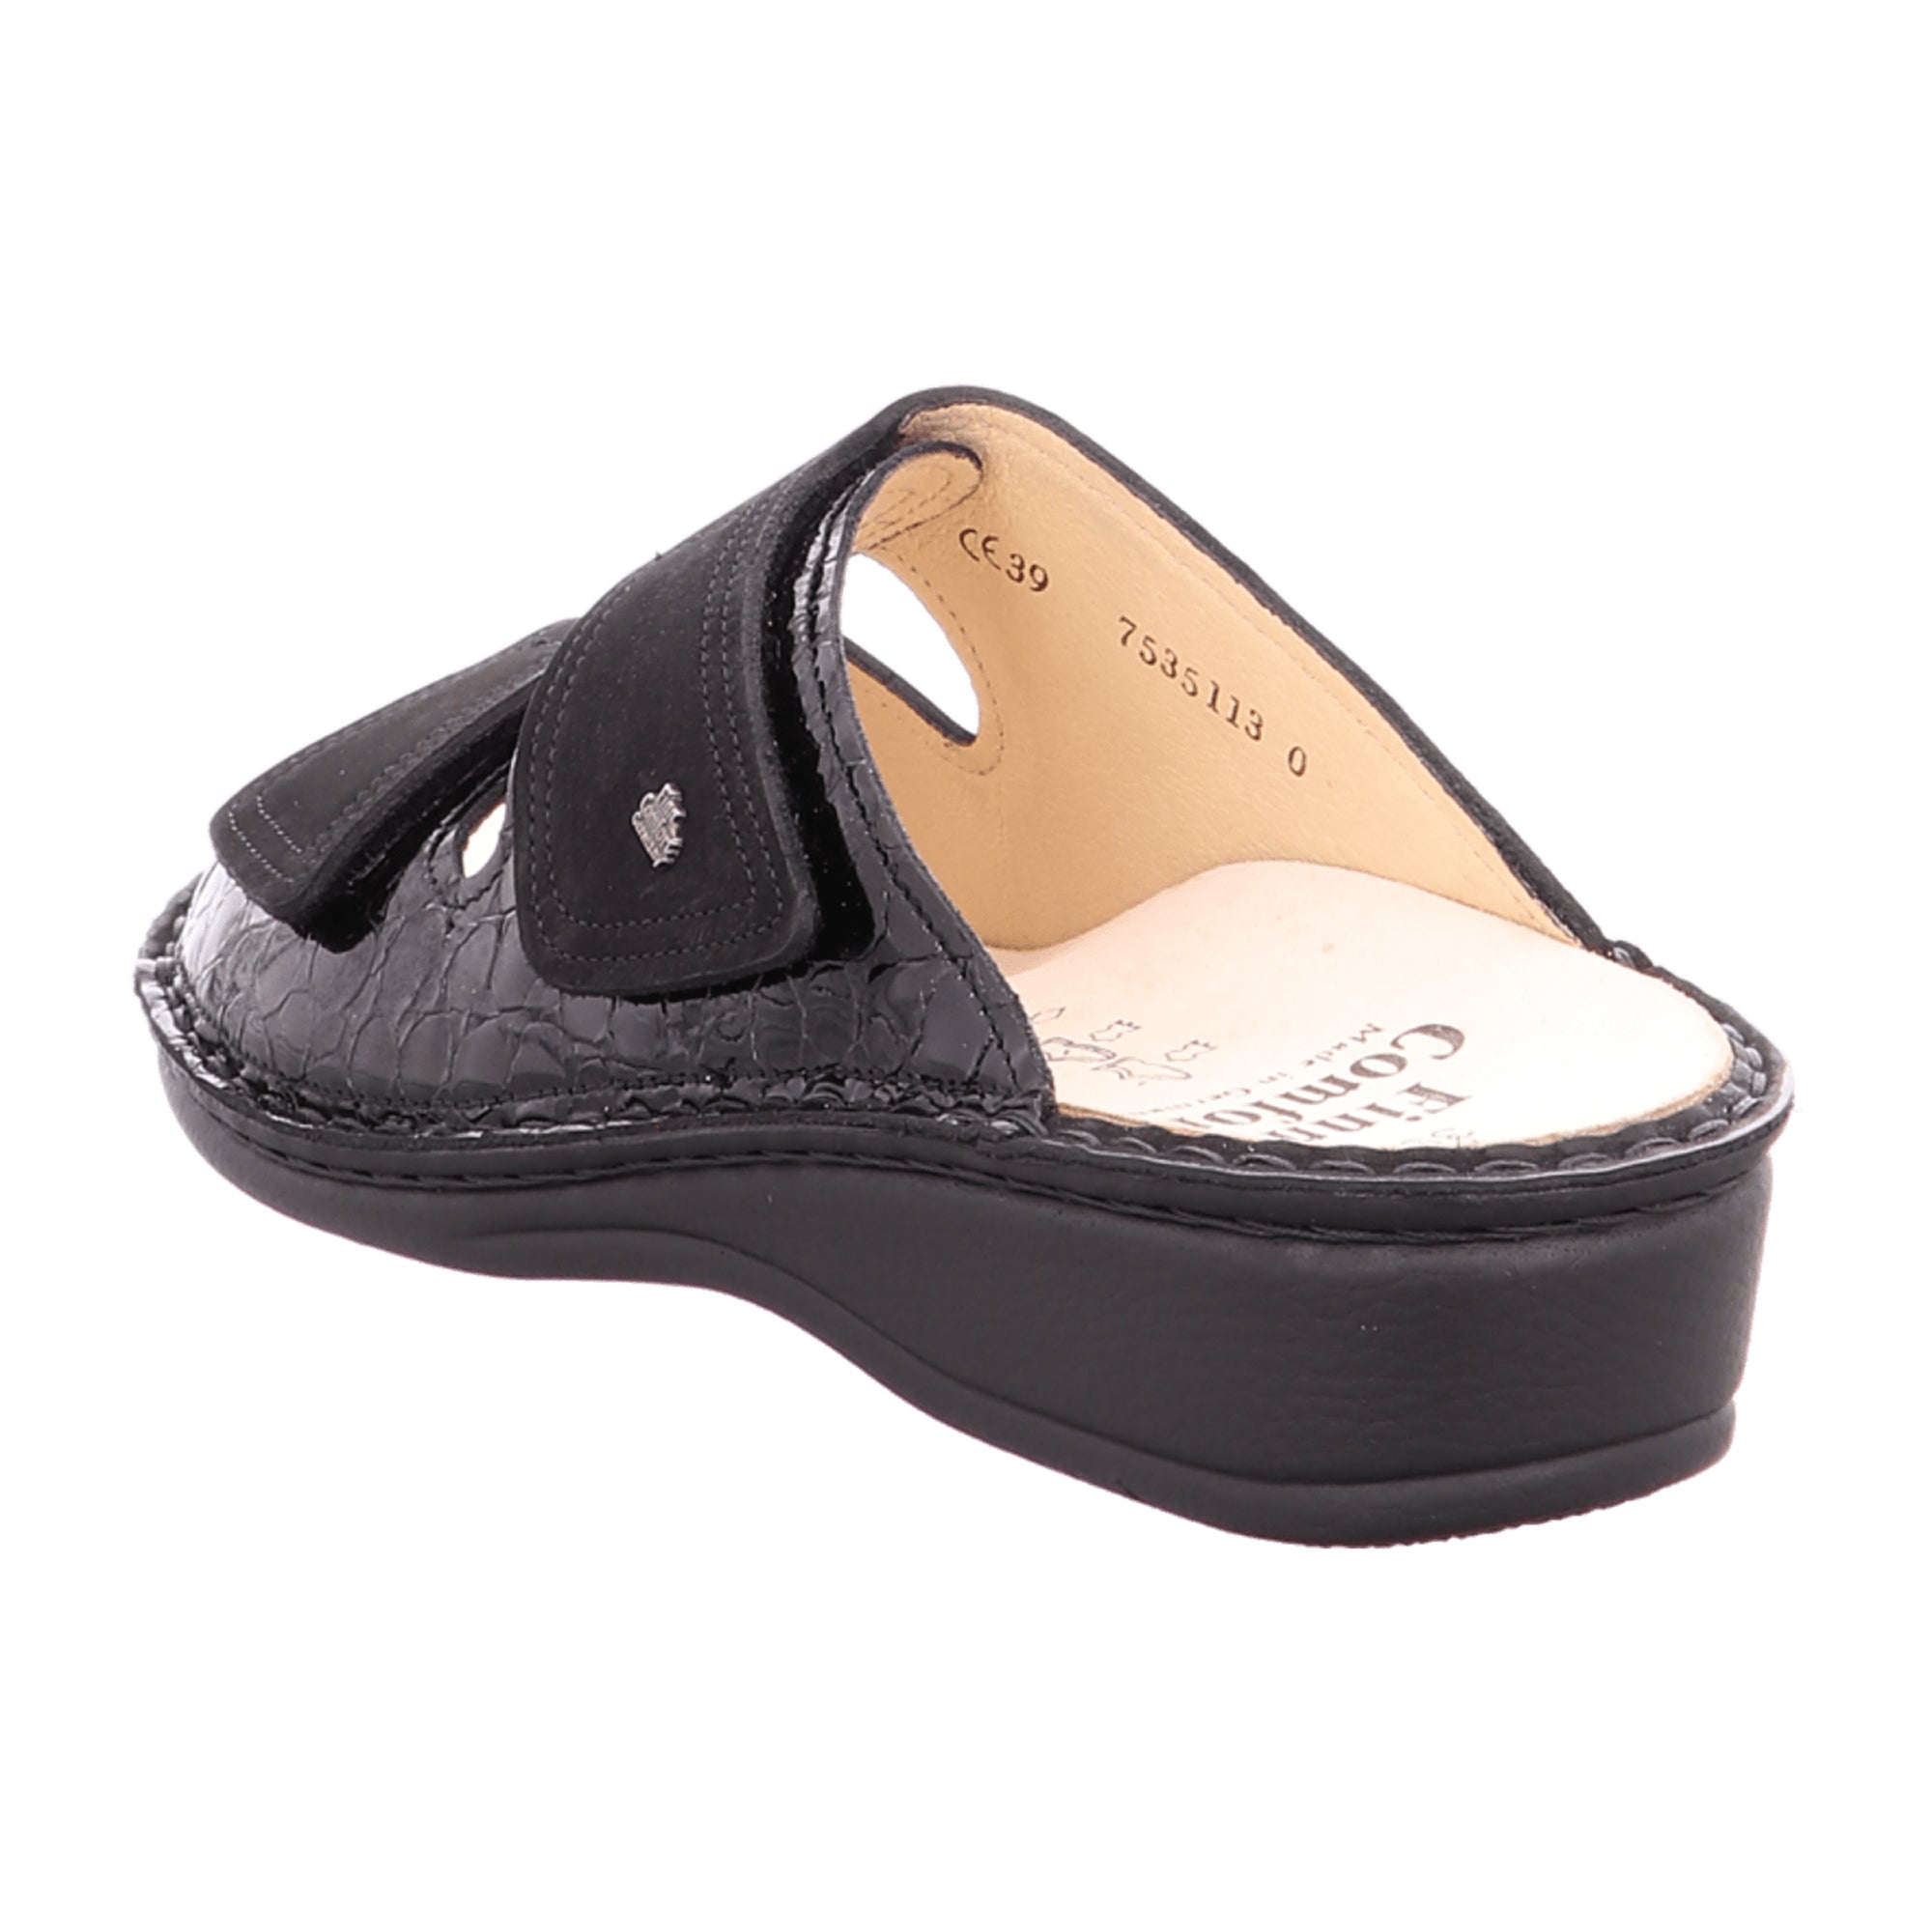 Finn Comfort Jamaica Women's Sandals, Stylish Black Comfort Sandals